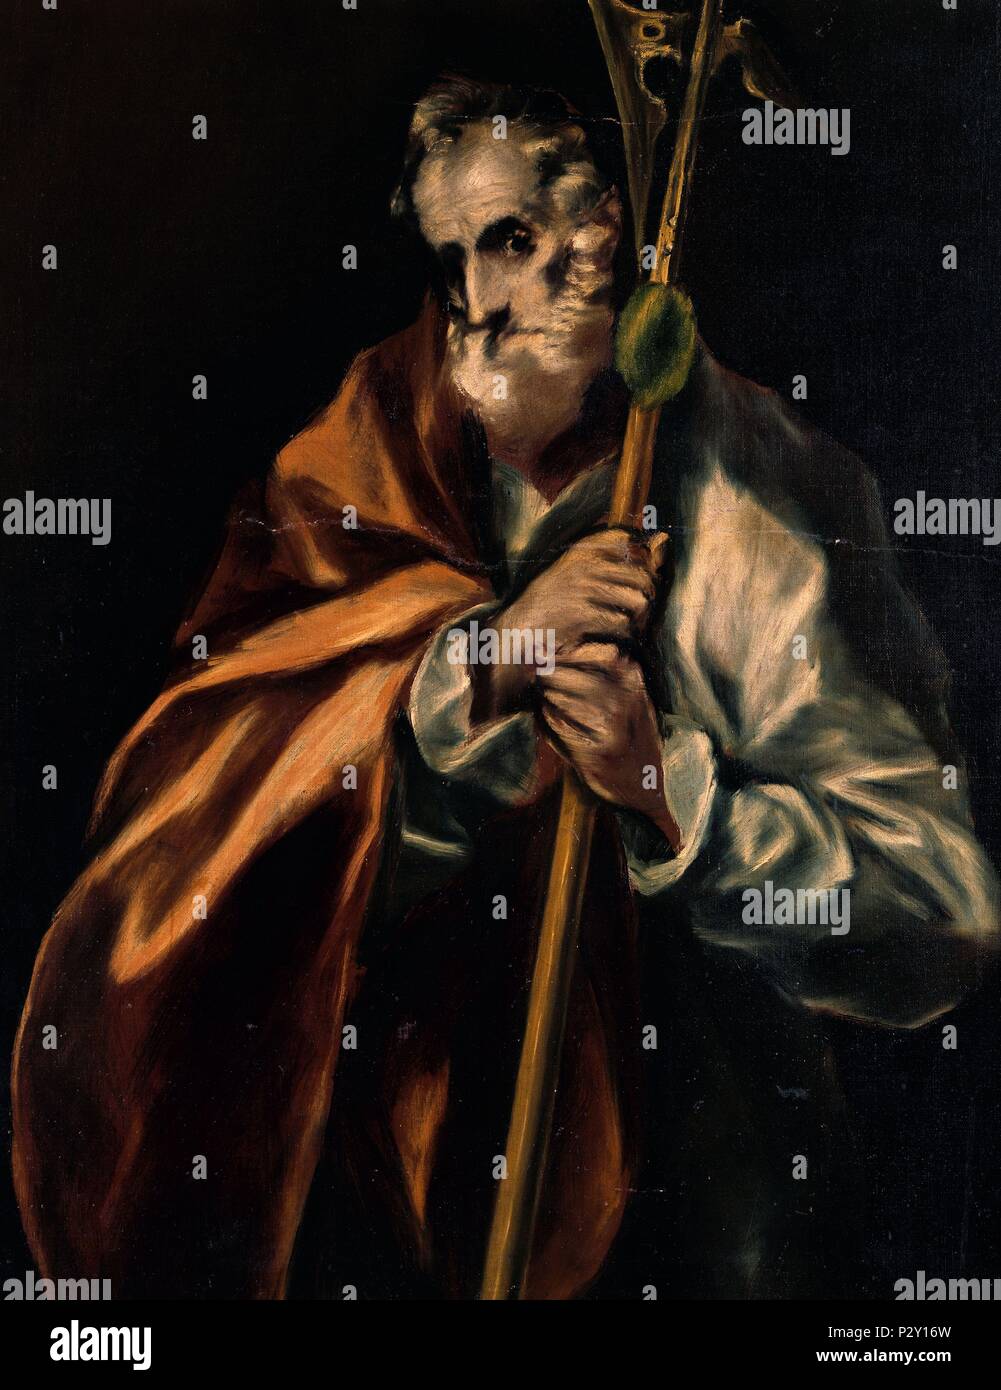 St. Jude Thaddeus - 1606 - 97x77 cm - oil on canvas - Spanish Mannerism. Author: El Greco (1541-1614). Location: CASA MUSEO DEL GRECO-COLECCION, TOLEDO, SPAIN. Also known as: SAN JUDAS TADEO. Stock Photo